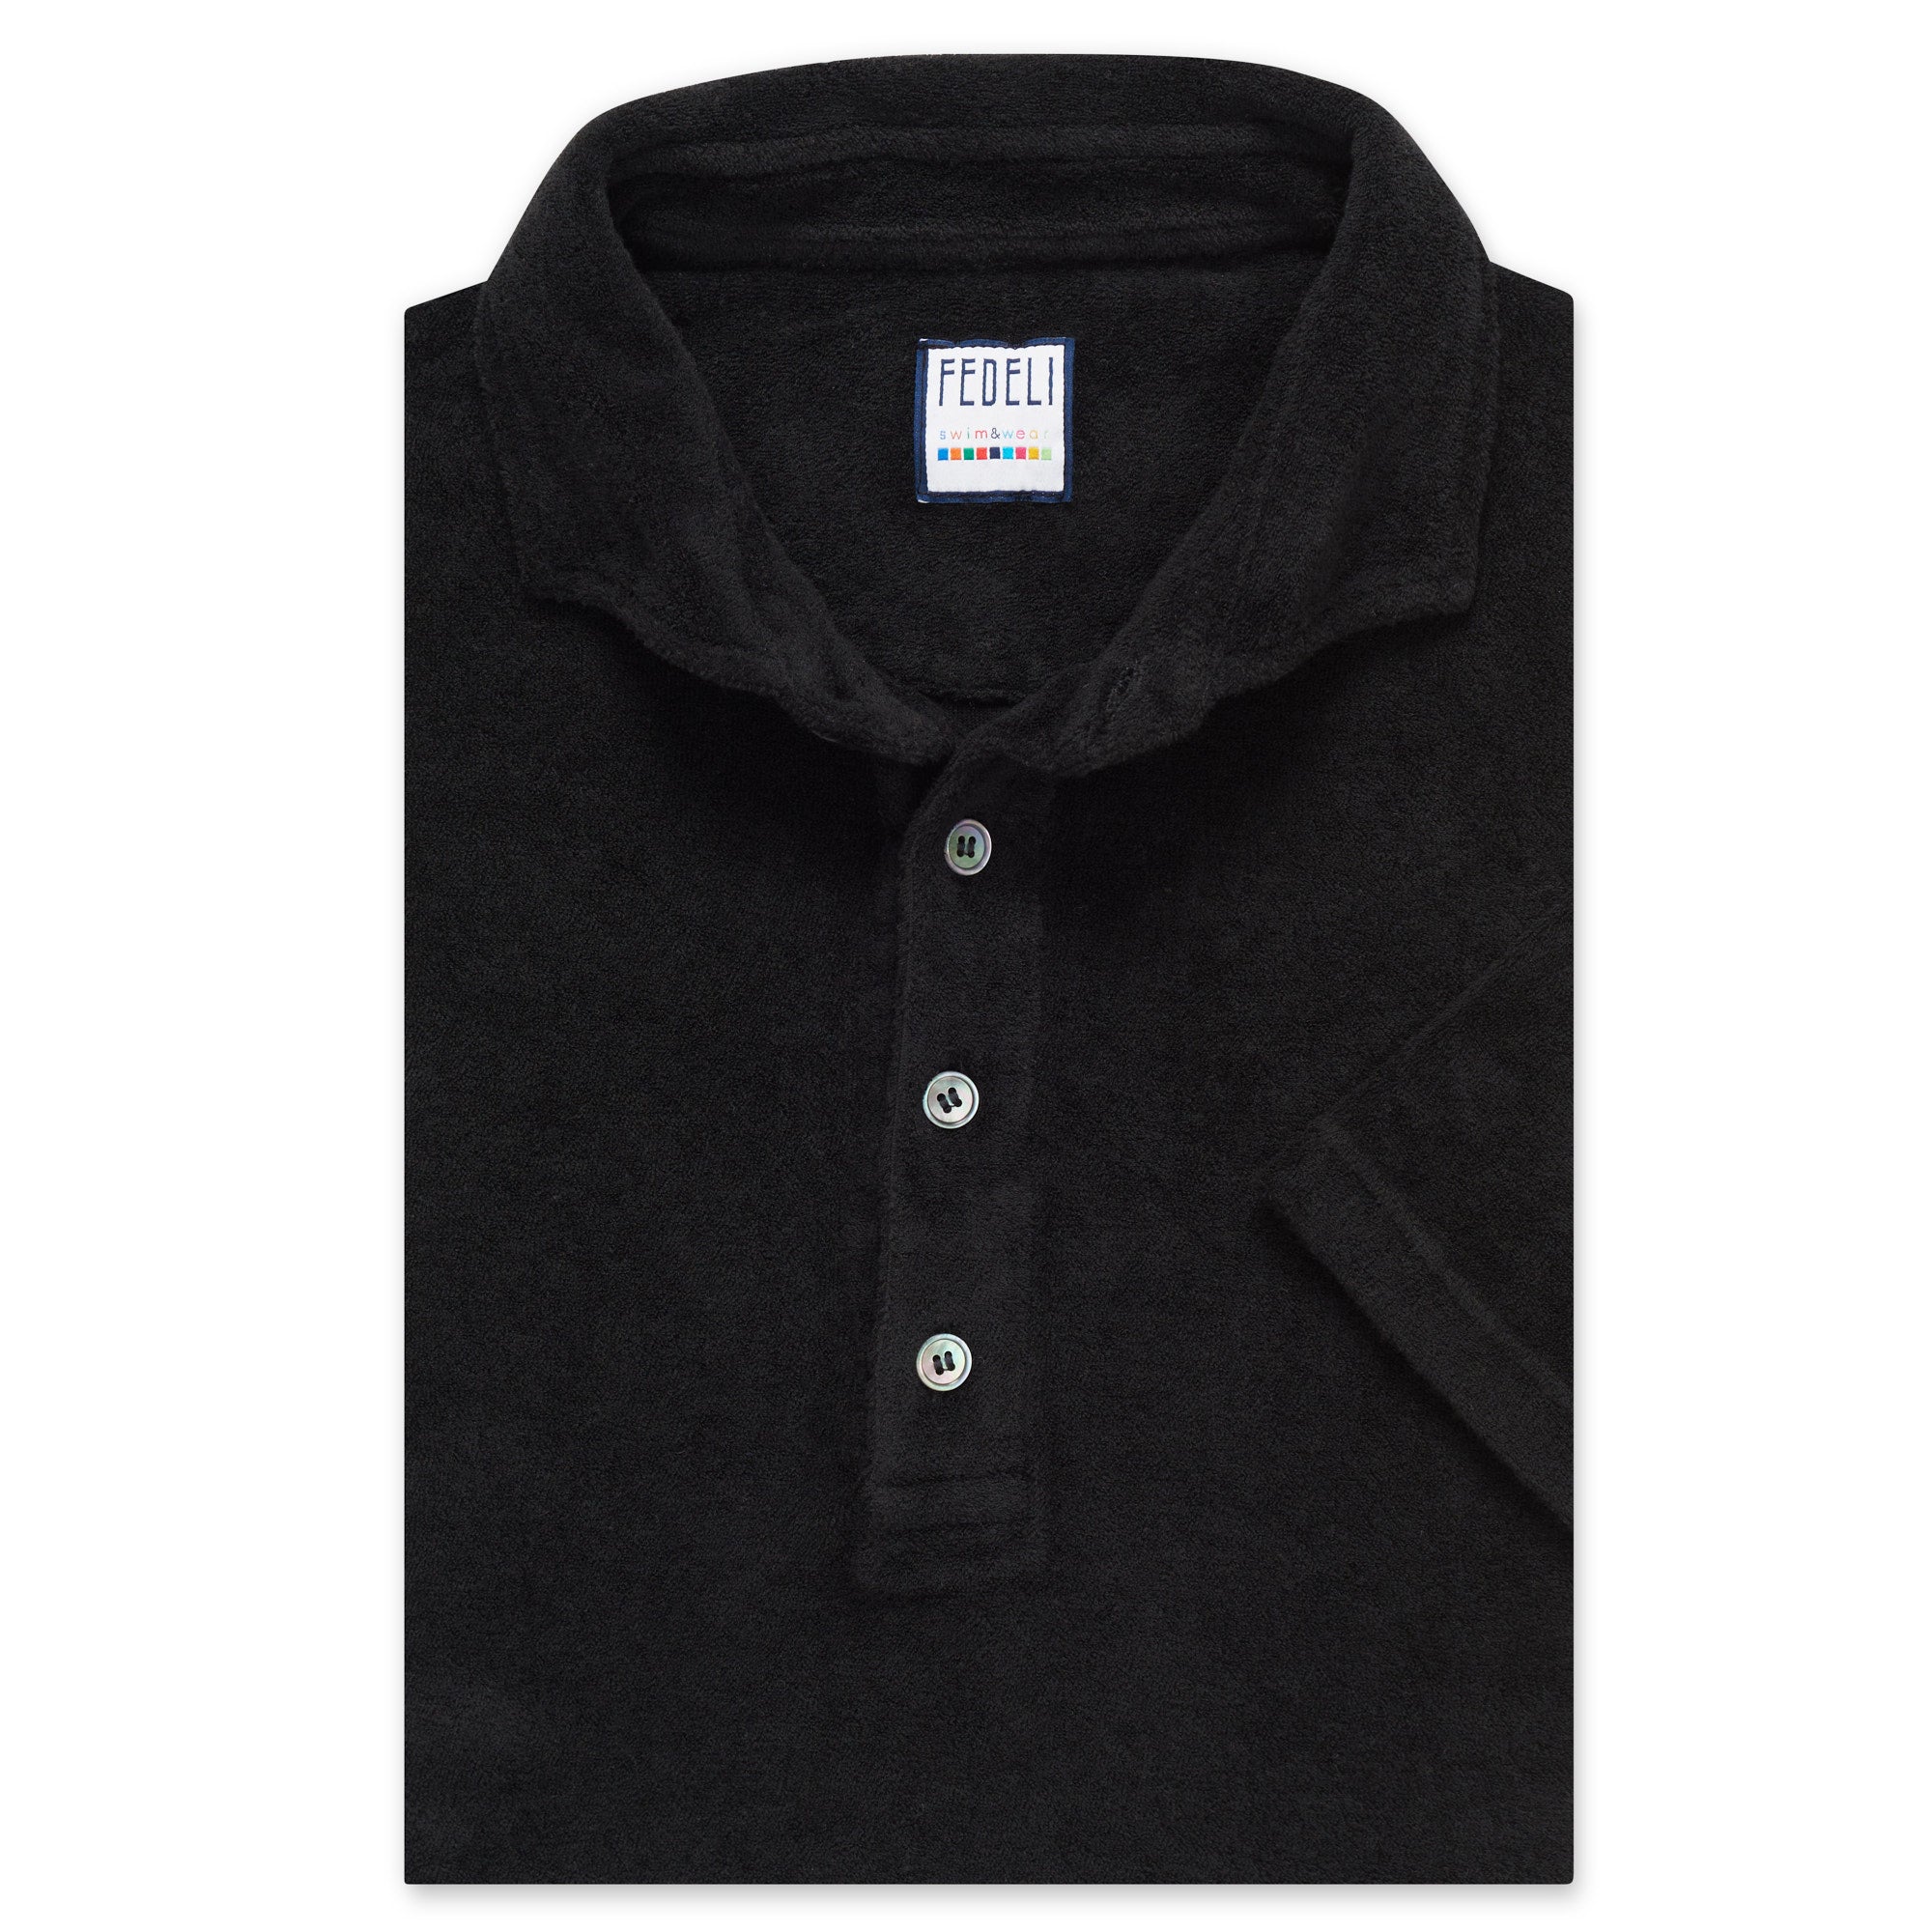 FEDELI "Ring" Black Terry Cloth Short Sleeve Polo Shirt NEW Slim Fit FEDELI